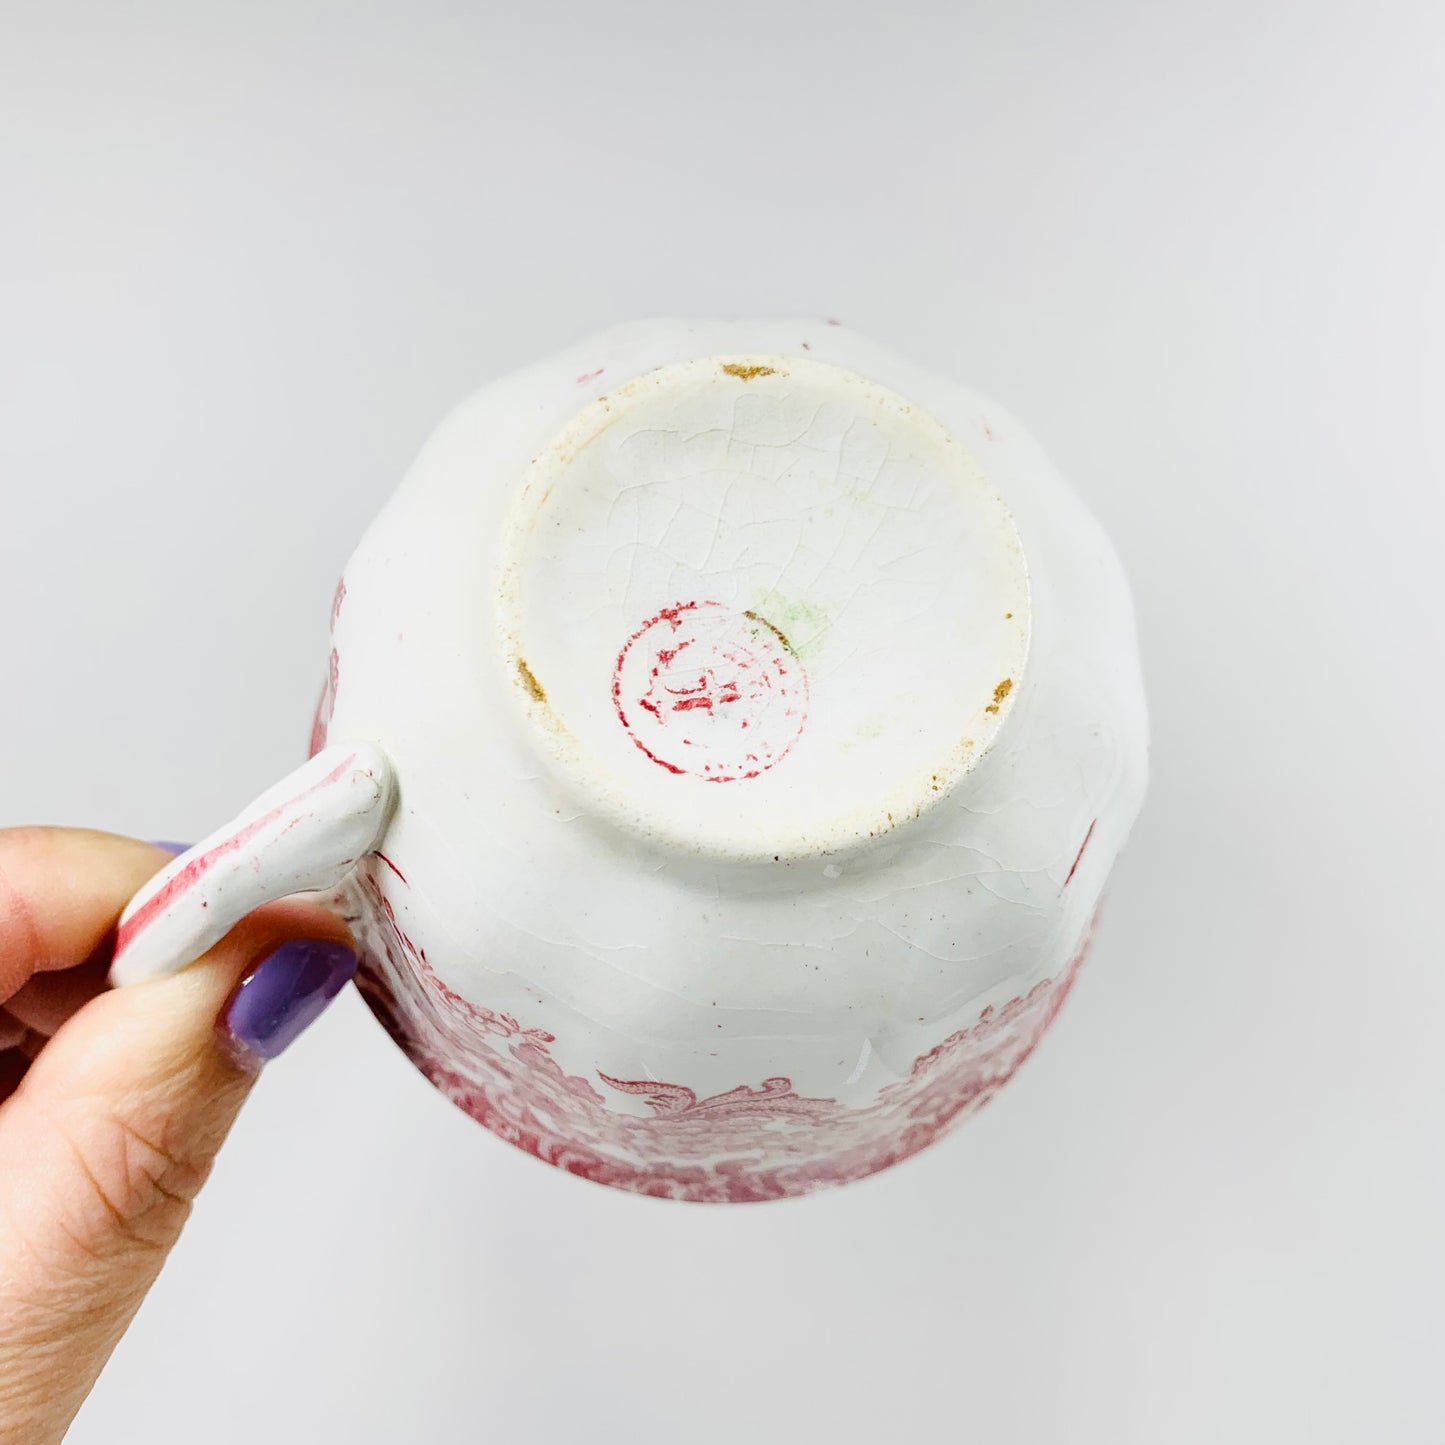 Extremely rare antique Pickman La Cartuja De Sevilla Transferware  red printed porcelain tea set